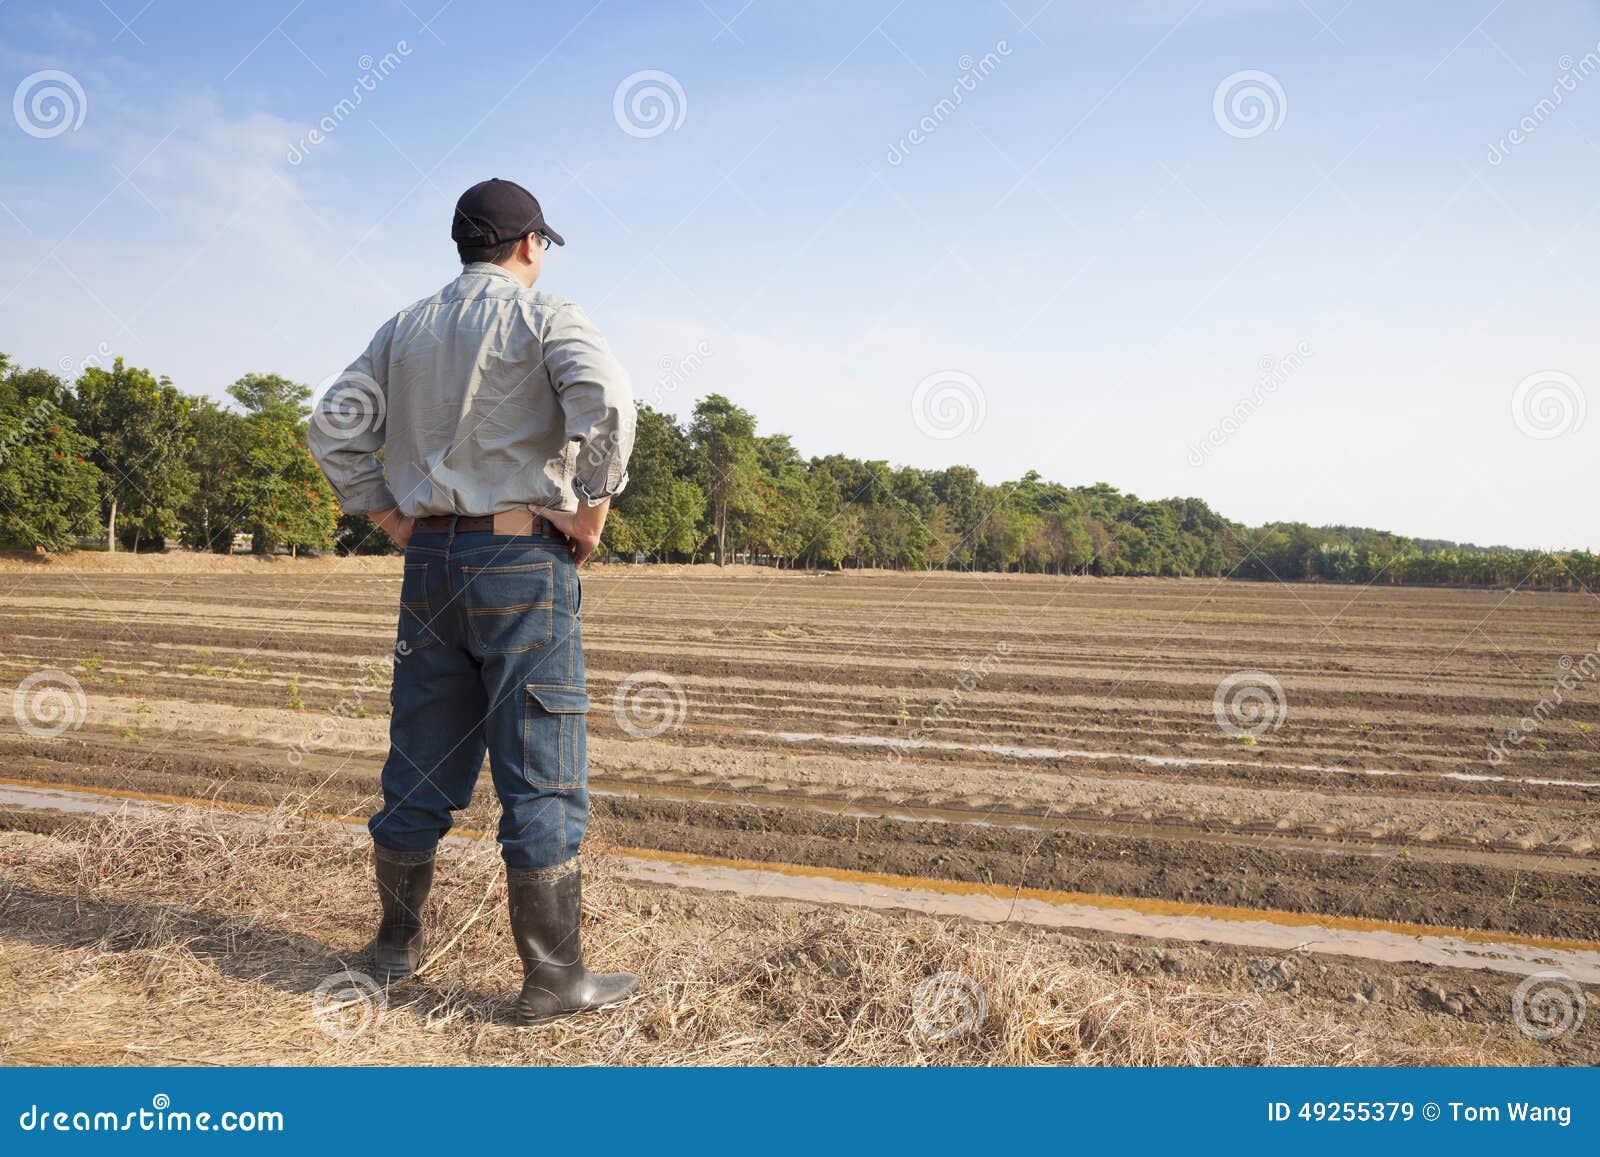 farmer standing on farming land